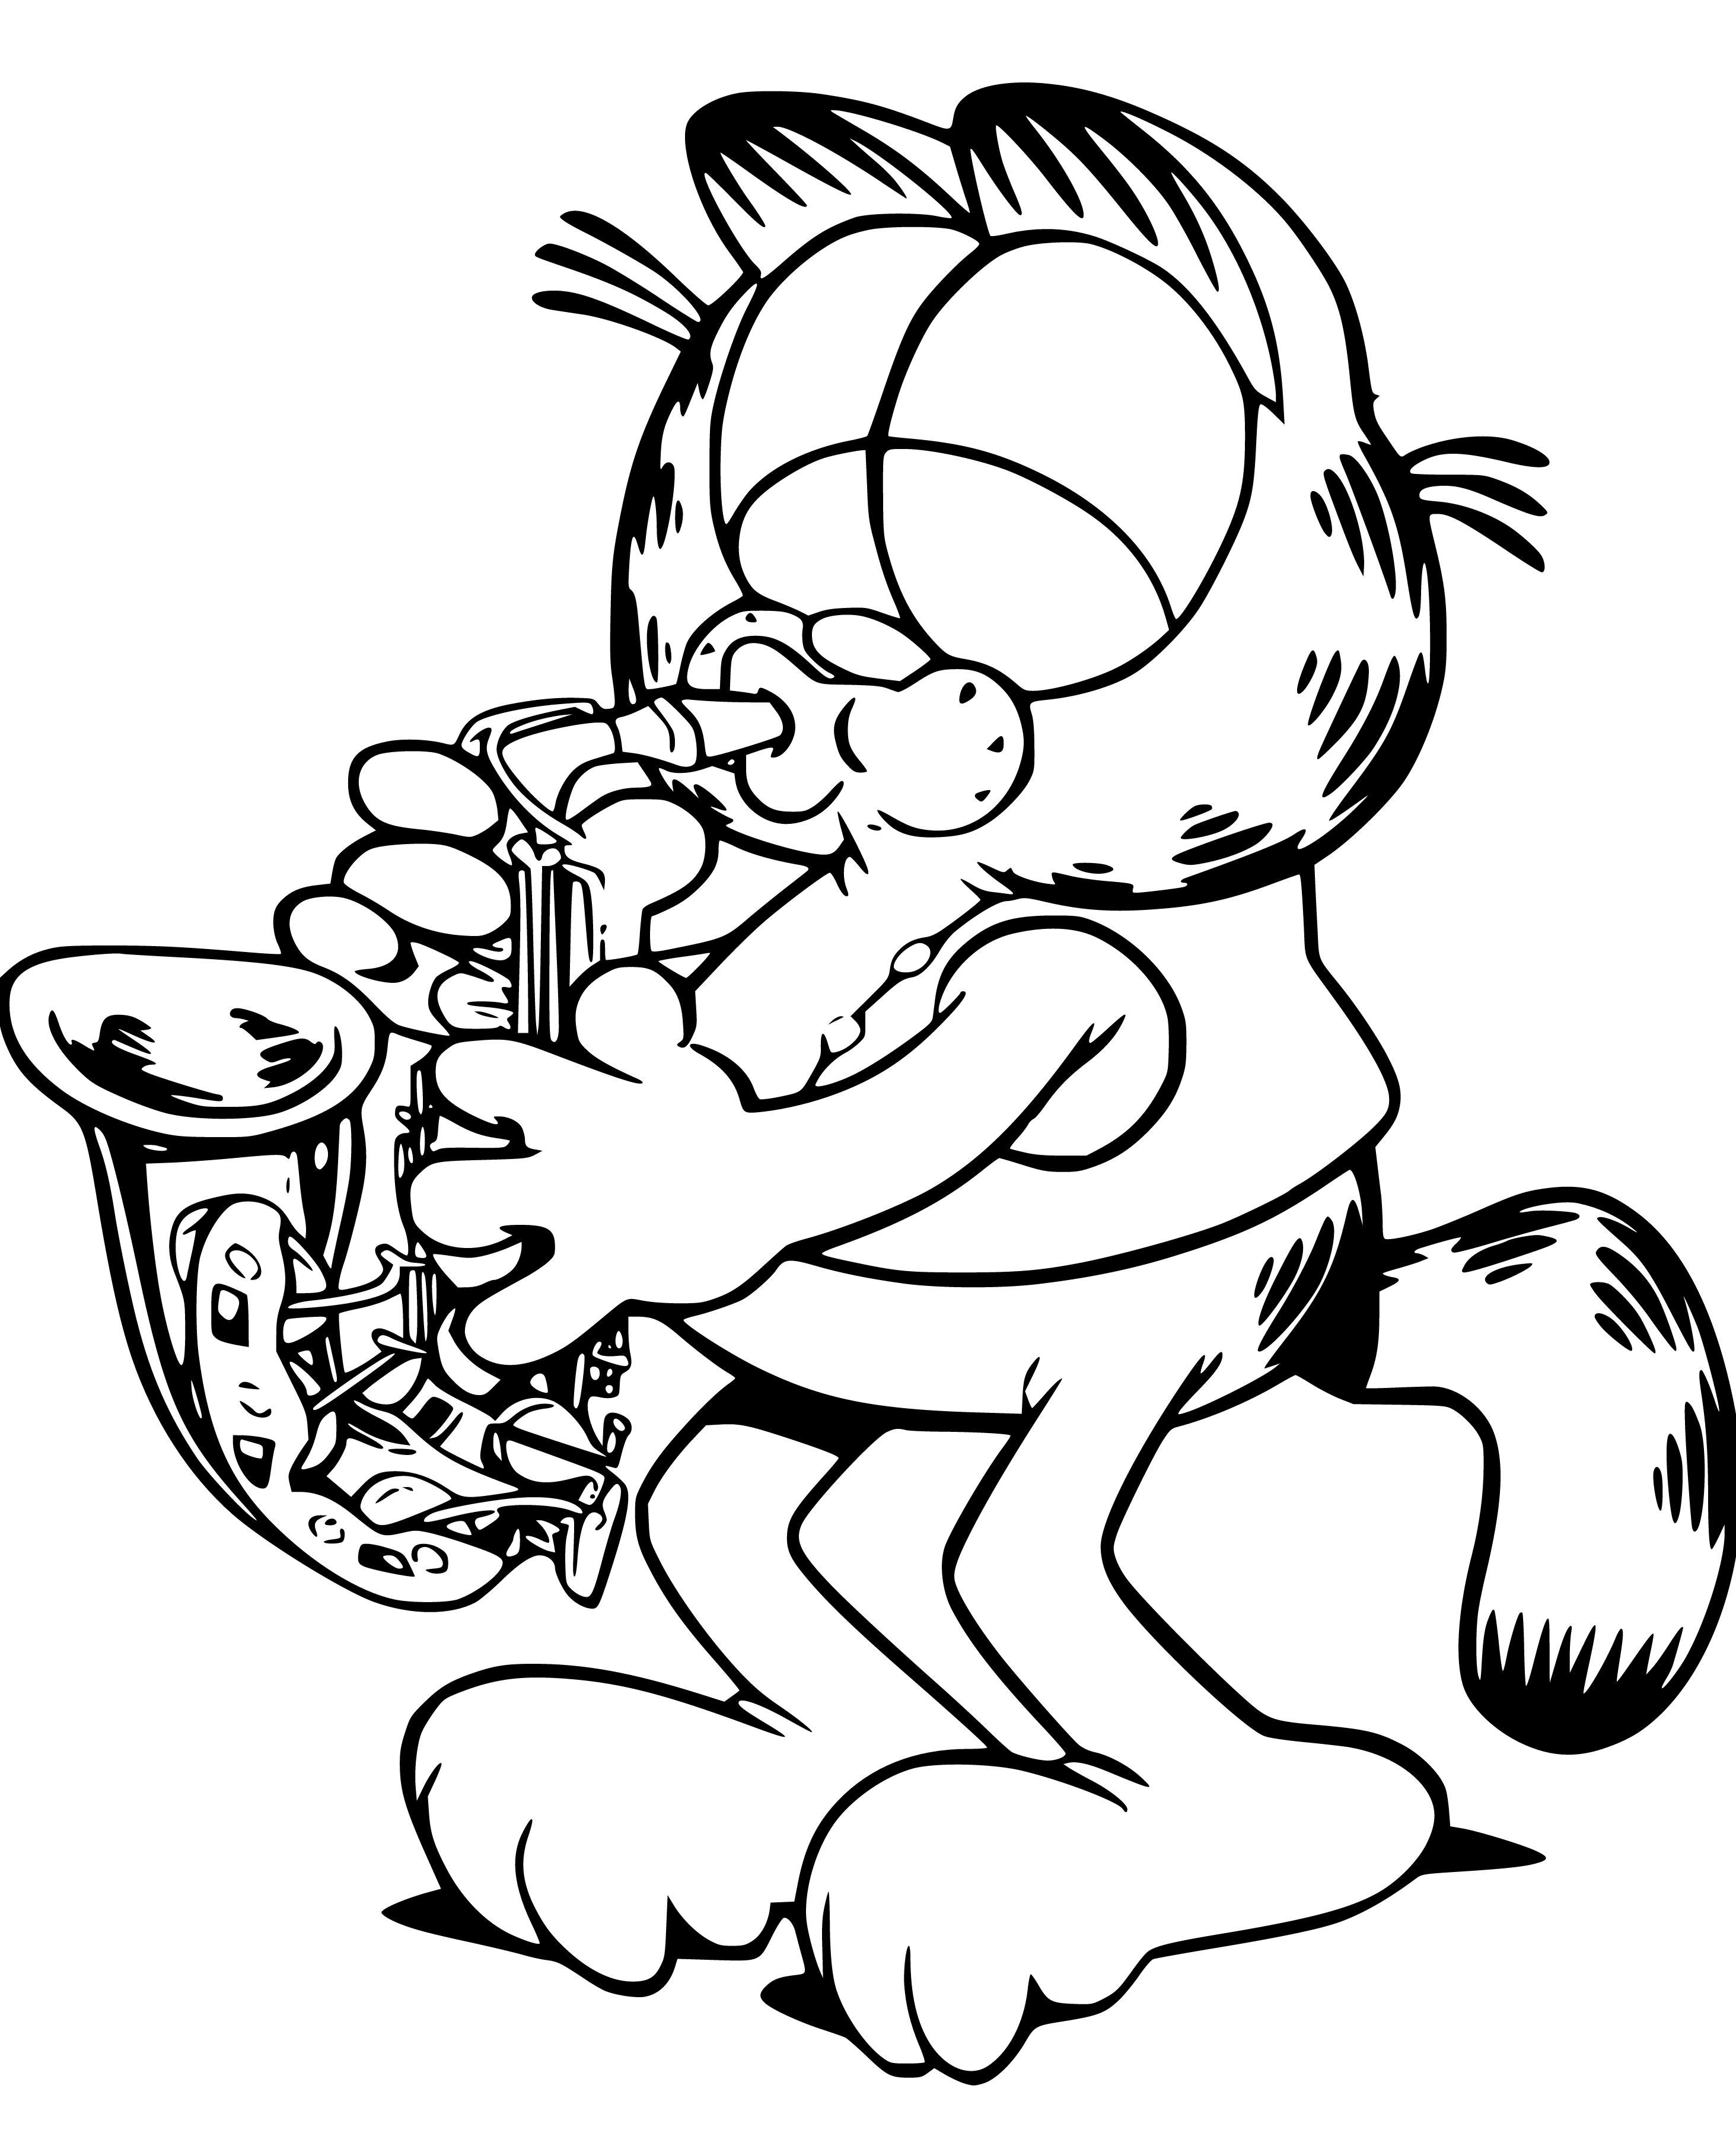 Garfield Music Coloring Page - SheetalColor.com